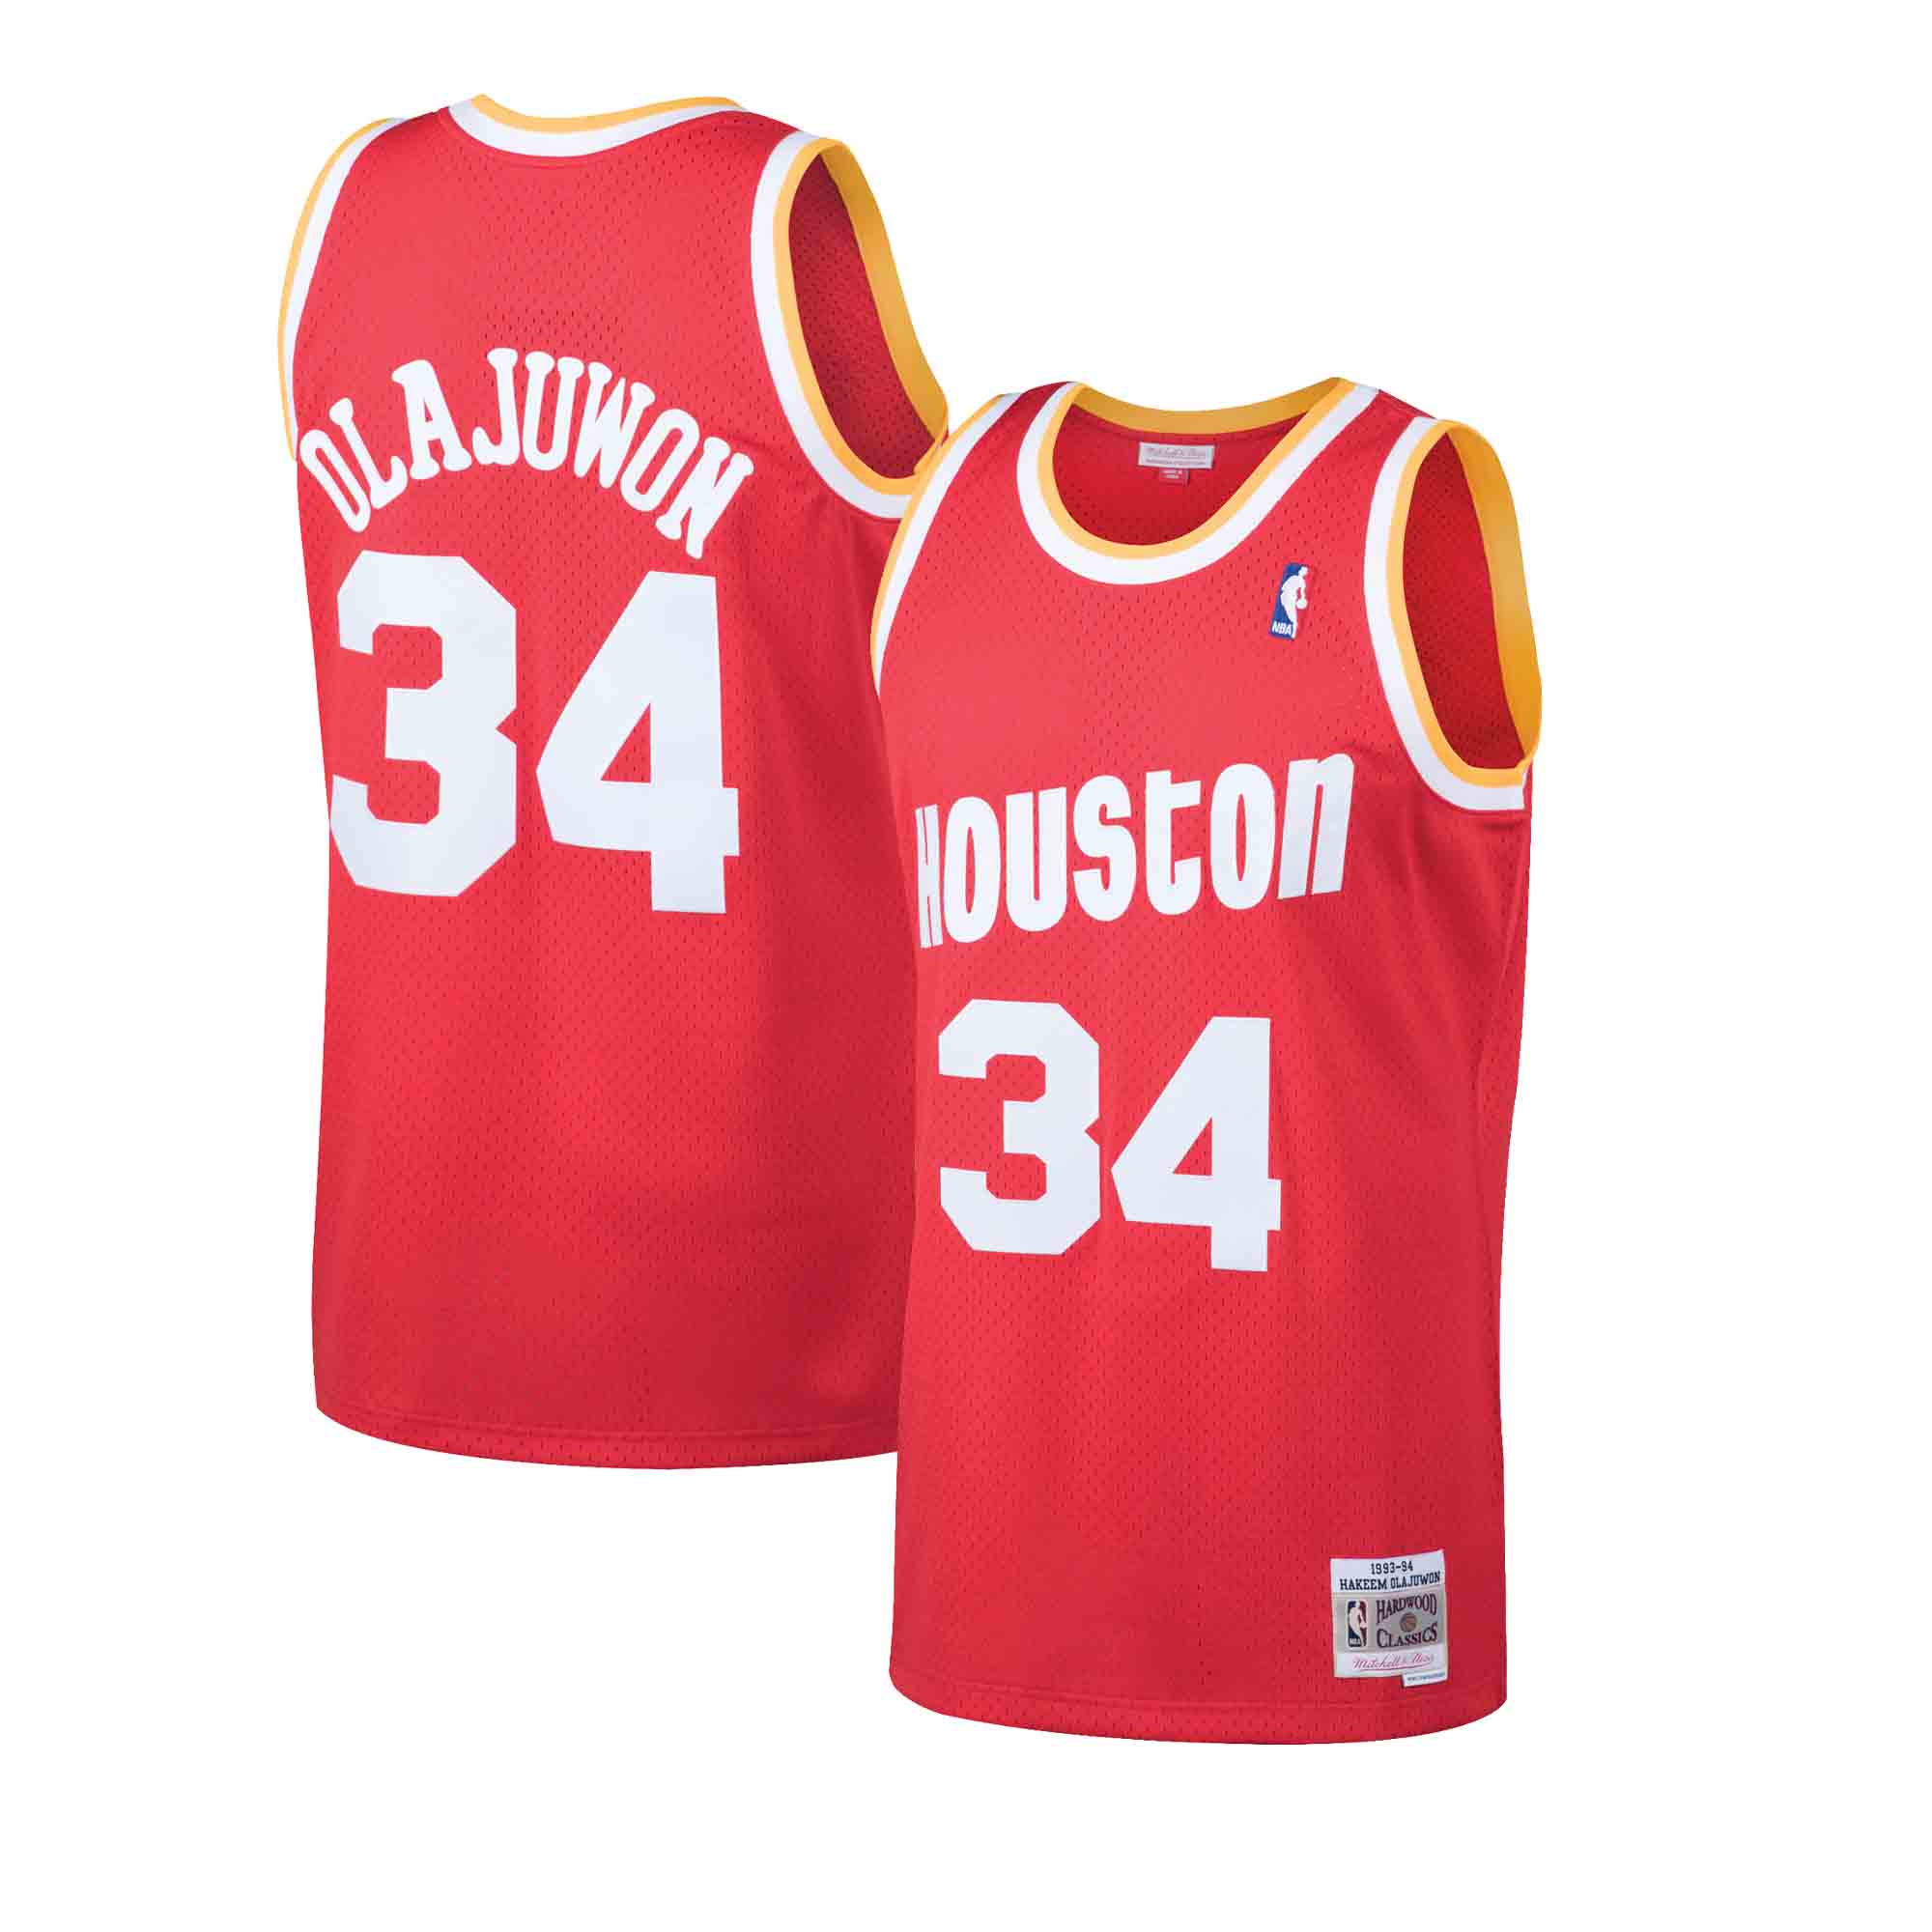 Hakeem Olajuwon Houston Rockets 90's Champion #34 Jersey Size 48 Mint!